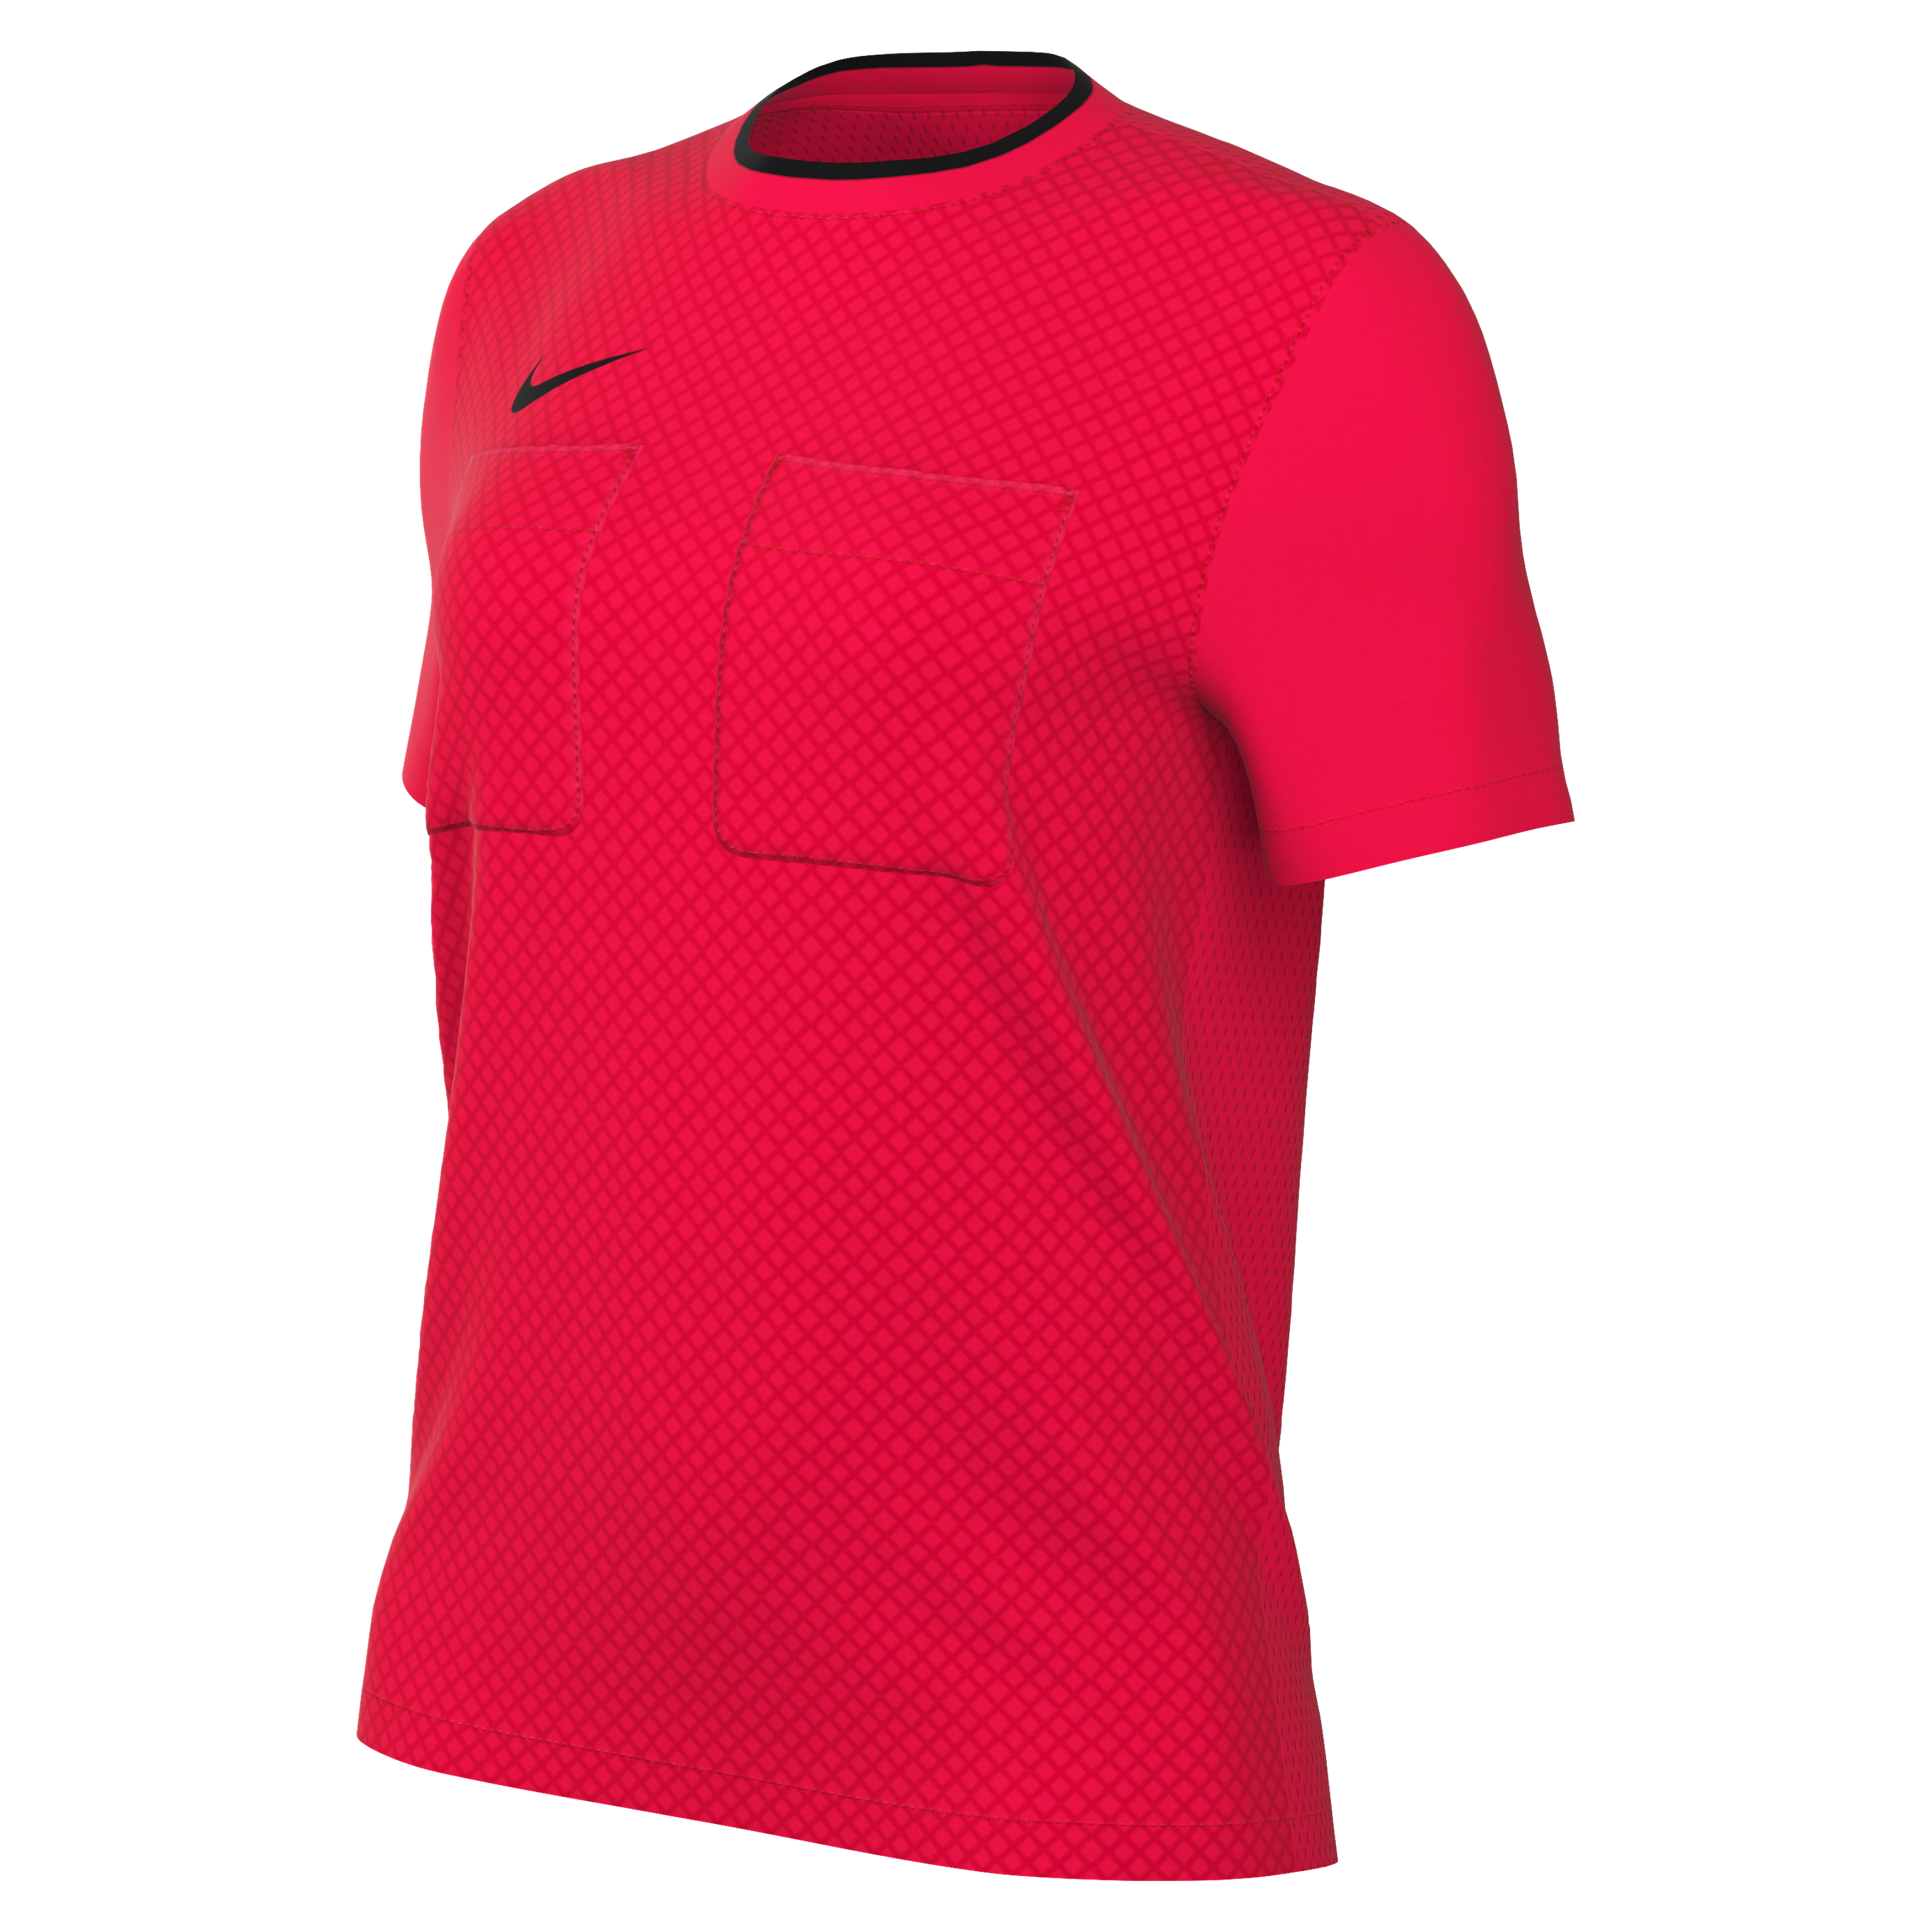 Women's Nike Dry Referee II Top Short Sleeve